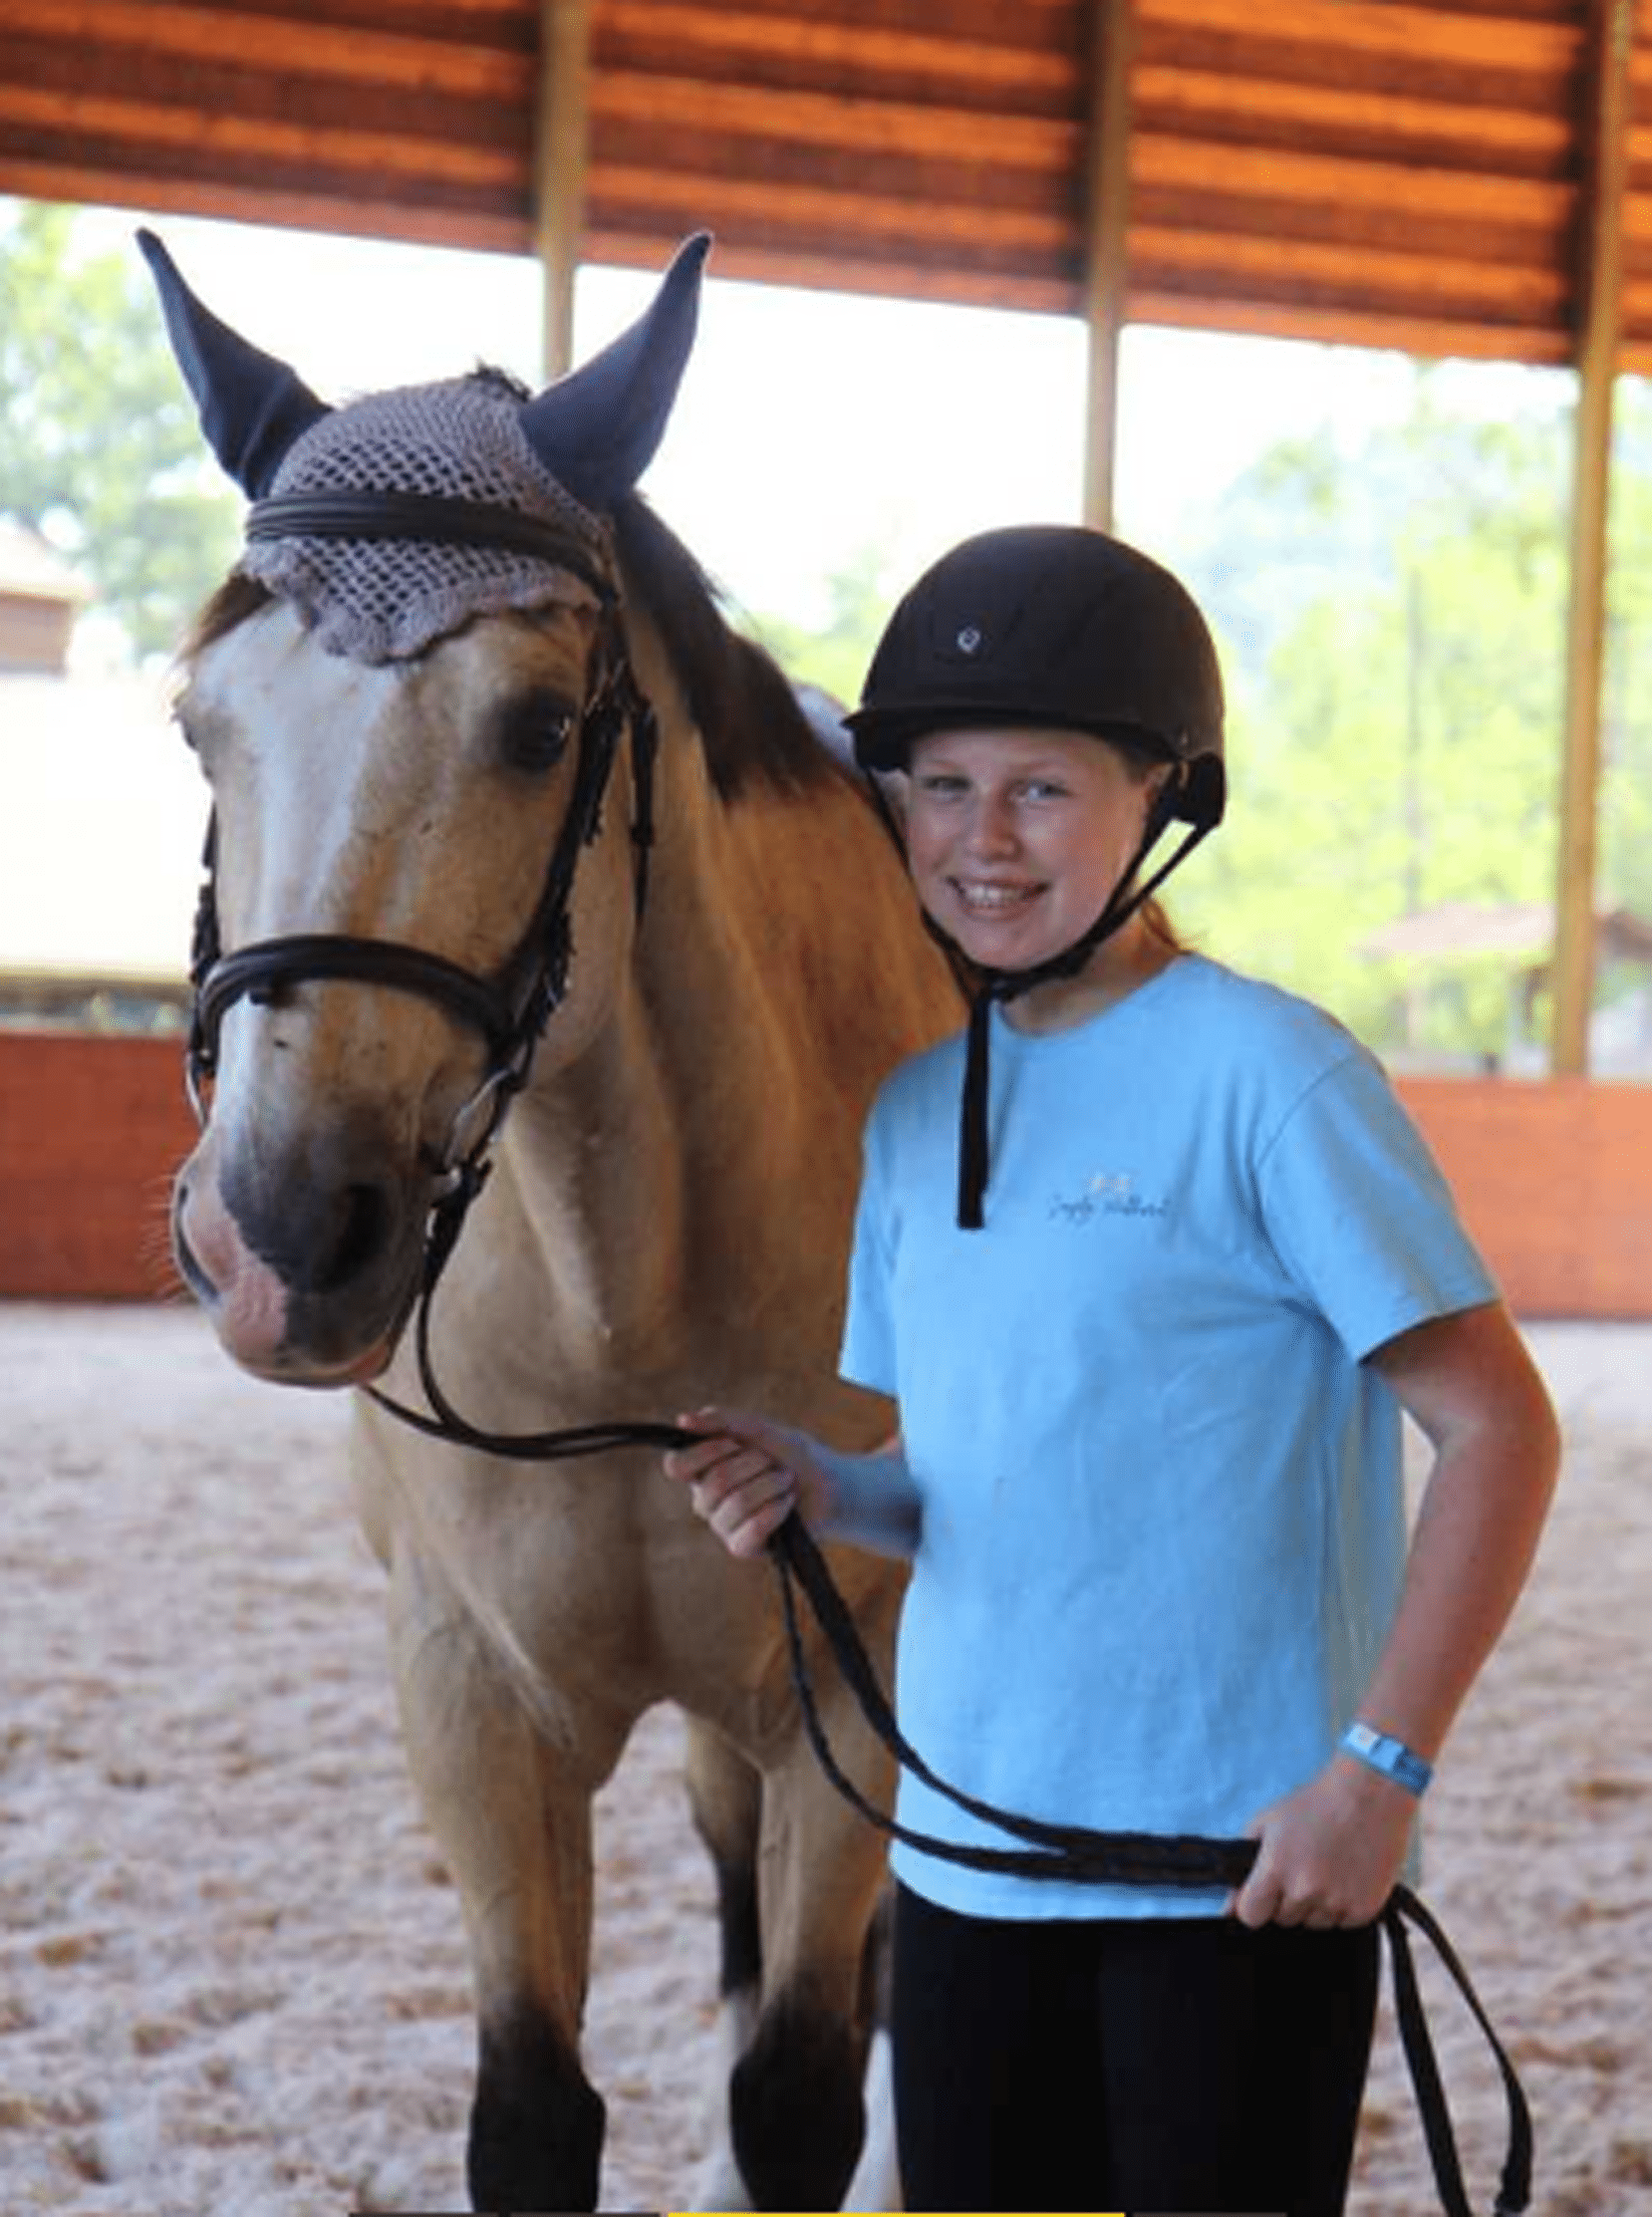 buckskin horse and girl wearing helmet and blue shirt